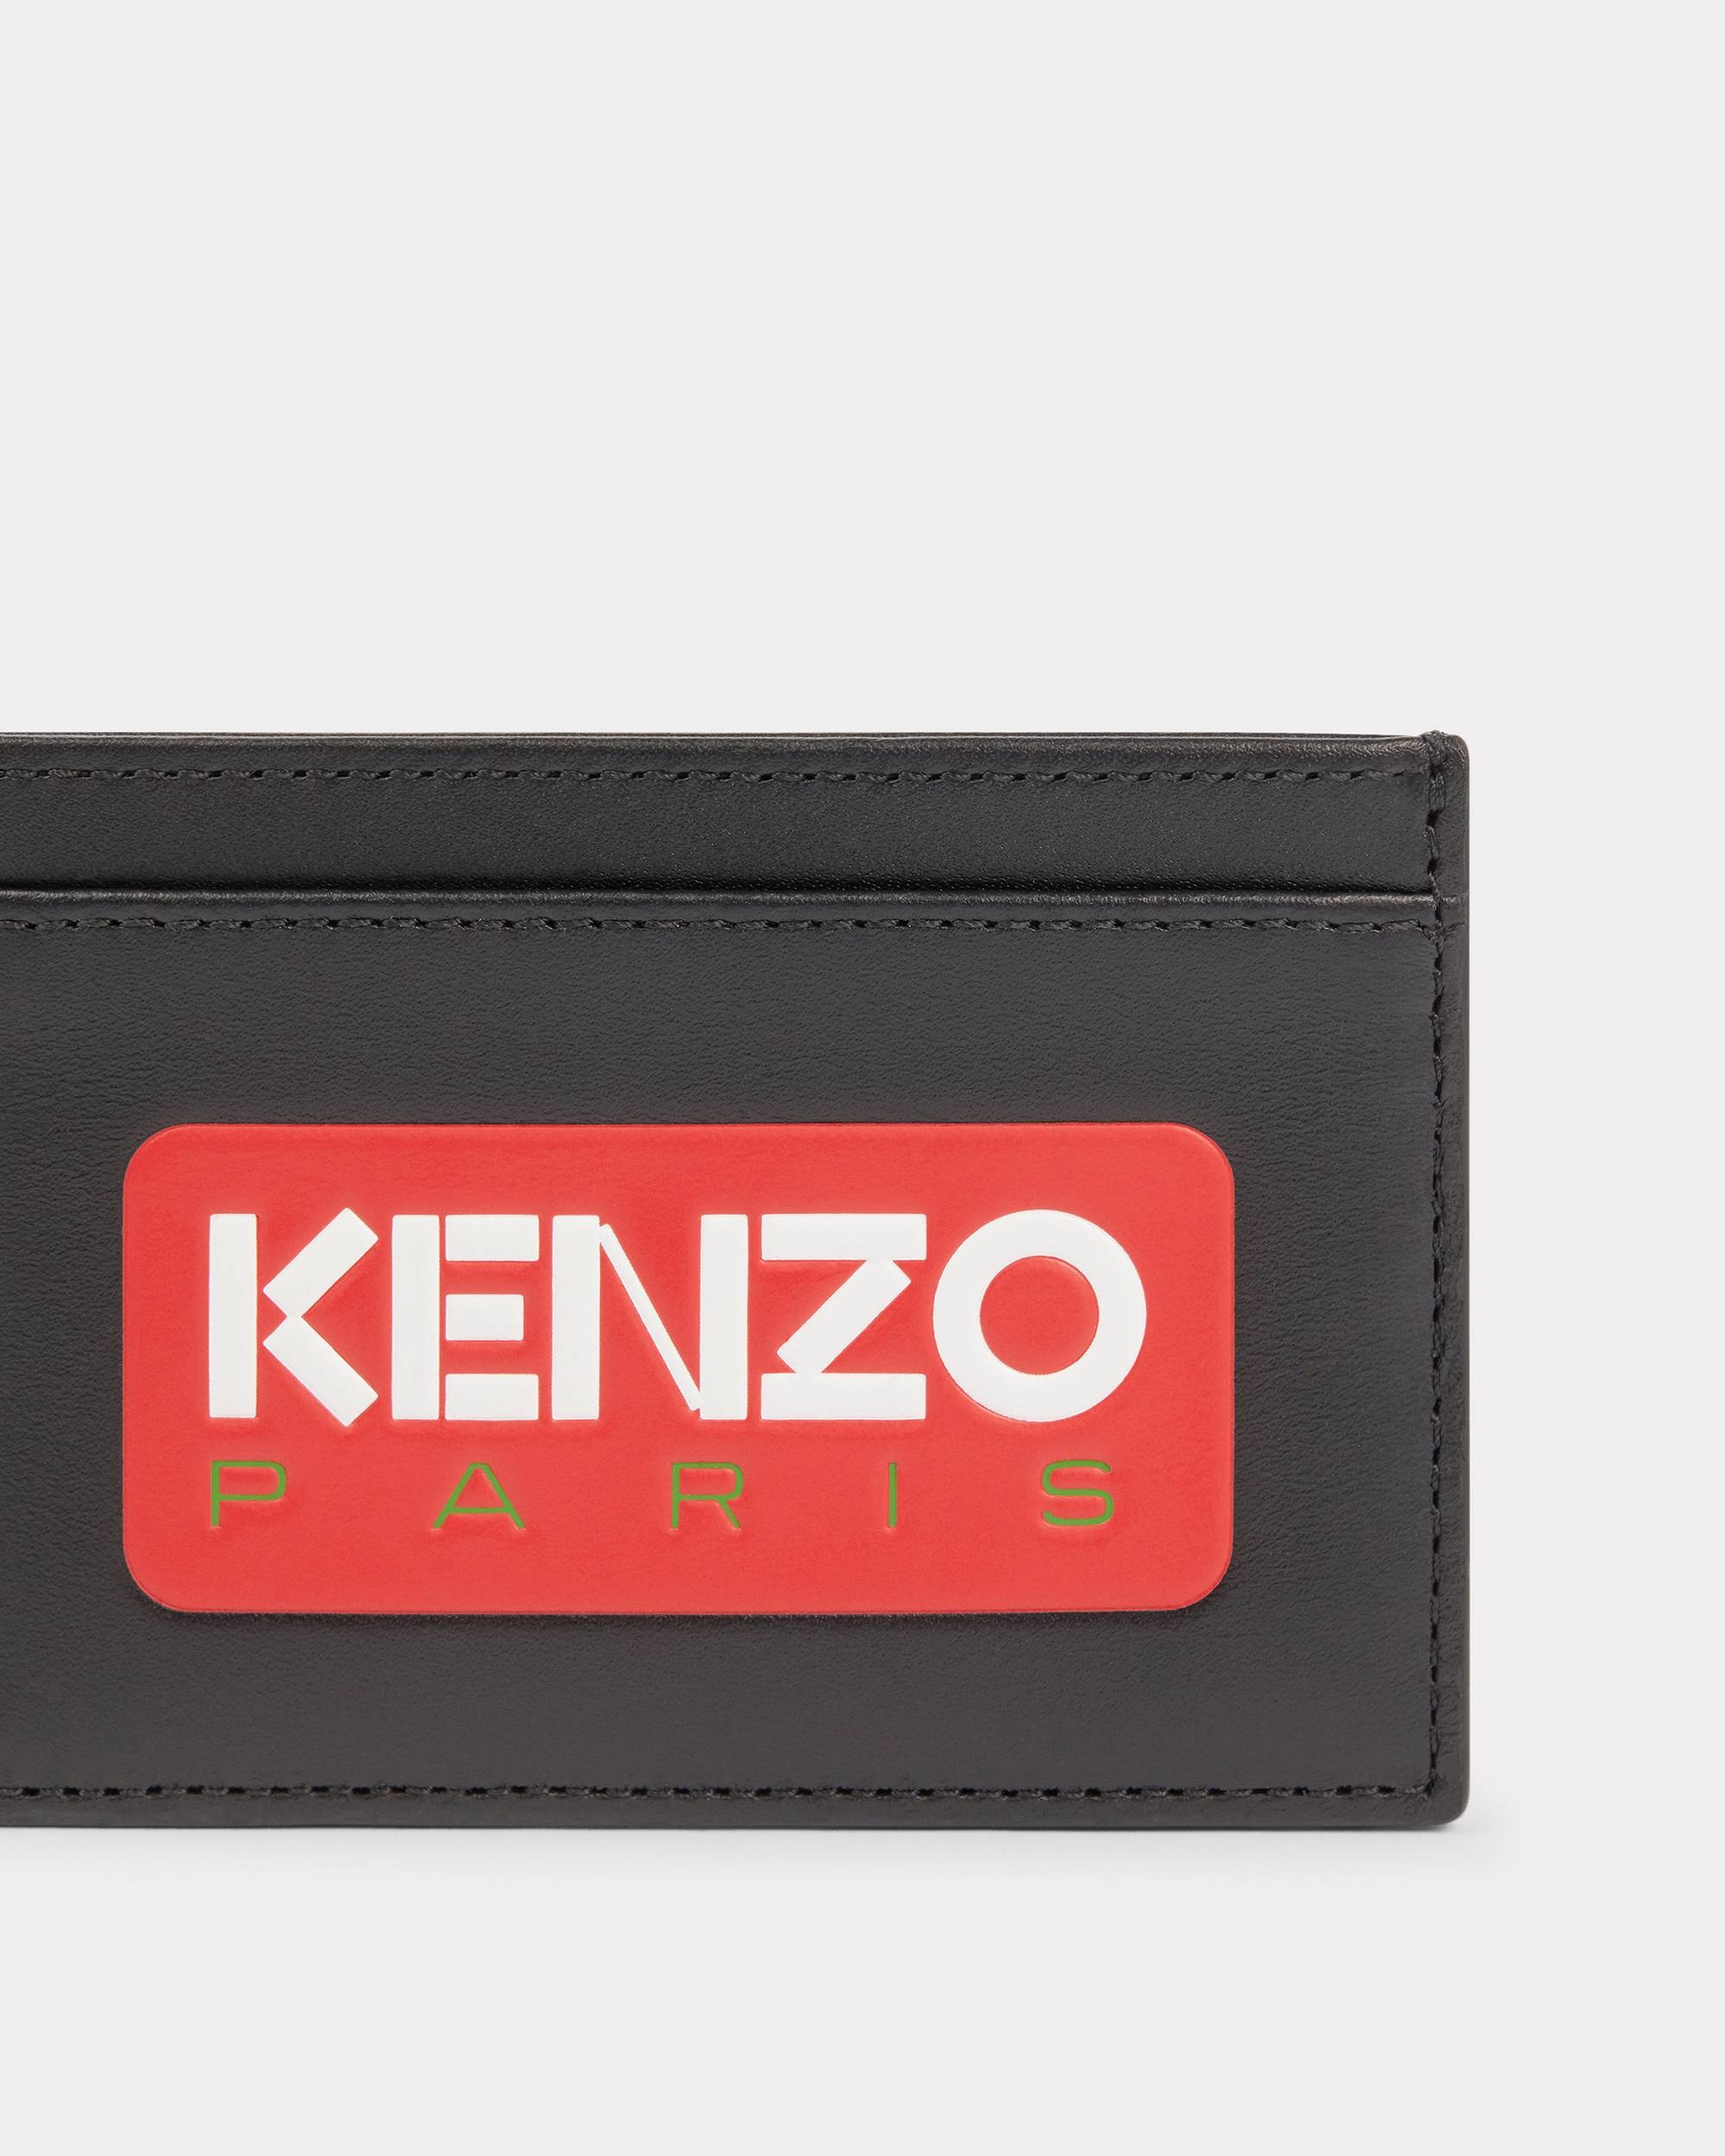 KENZO Paris leather cardholder - 3